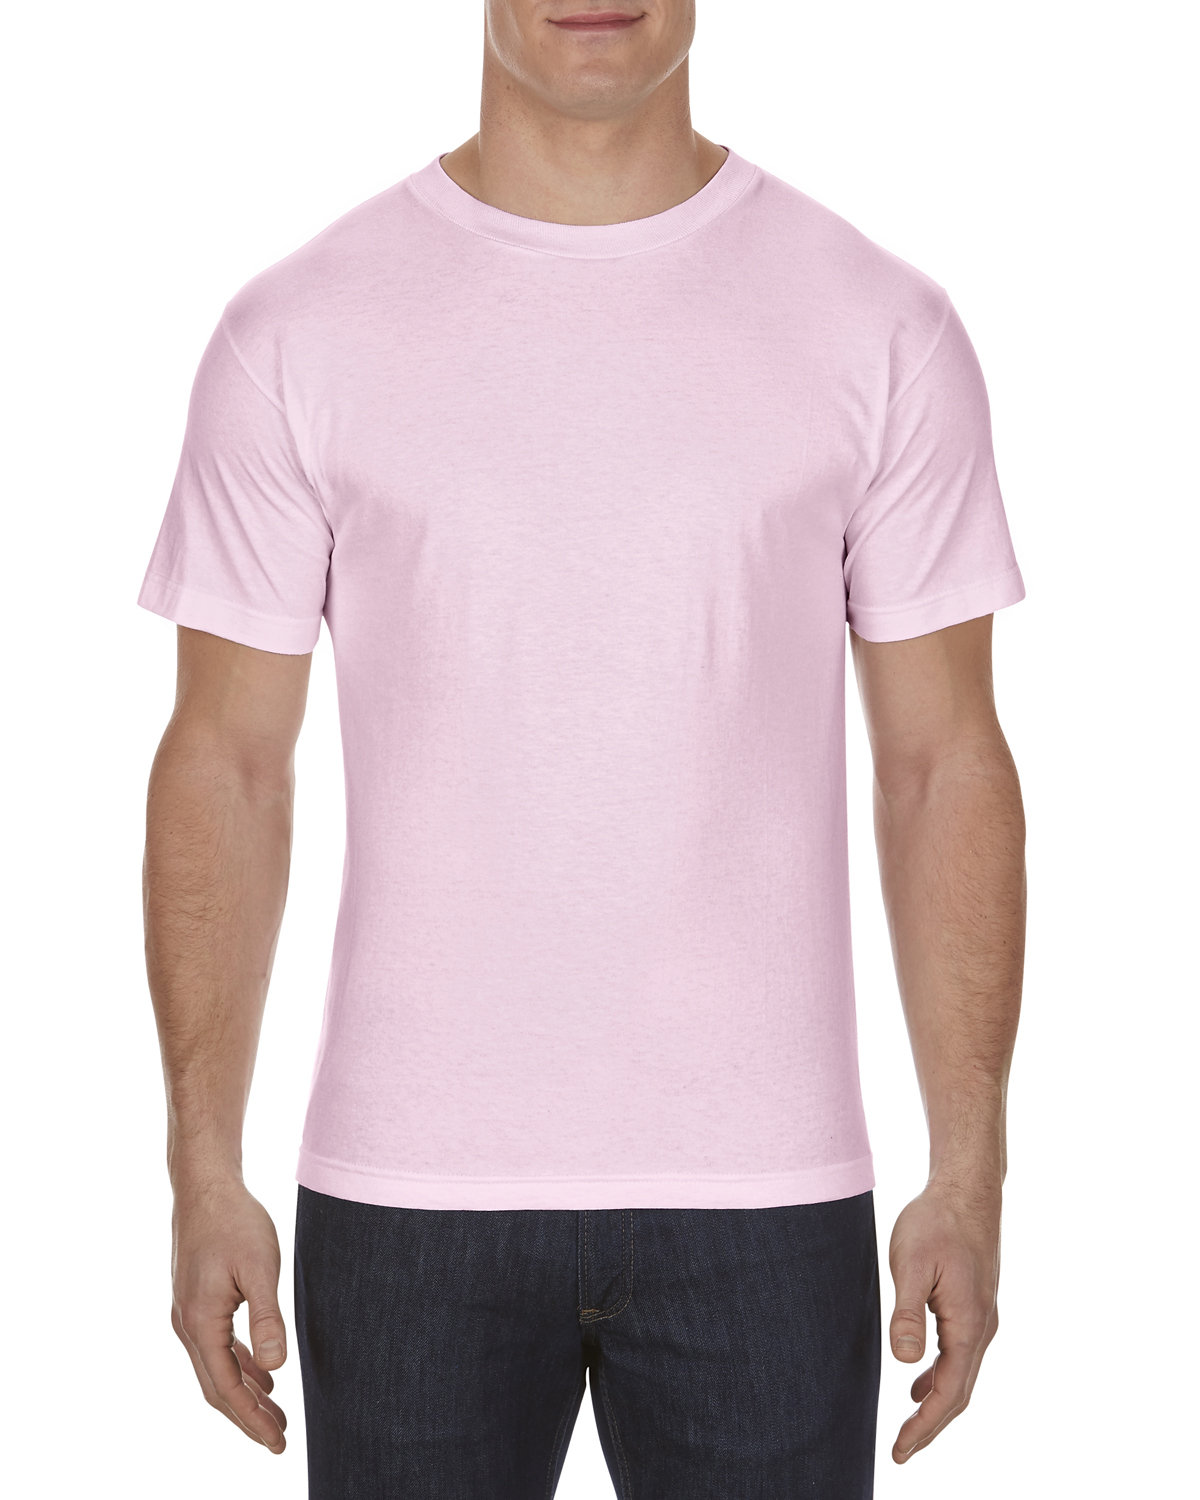 Alstyle Adult 6.0 oz., 100% Cotton T-Shirt PINK 